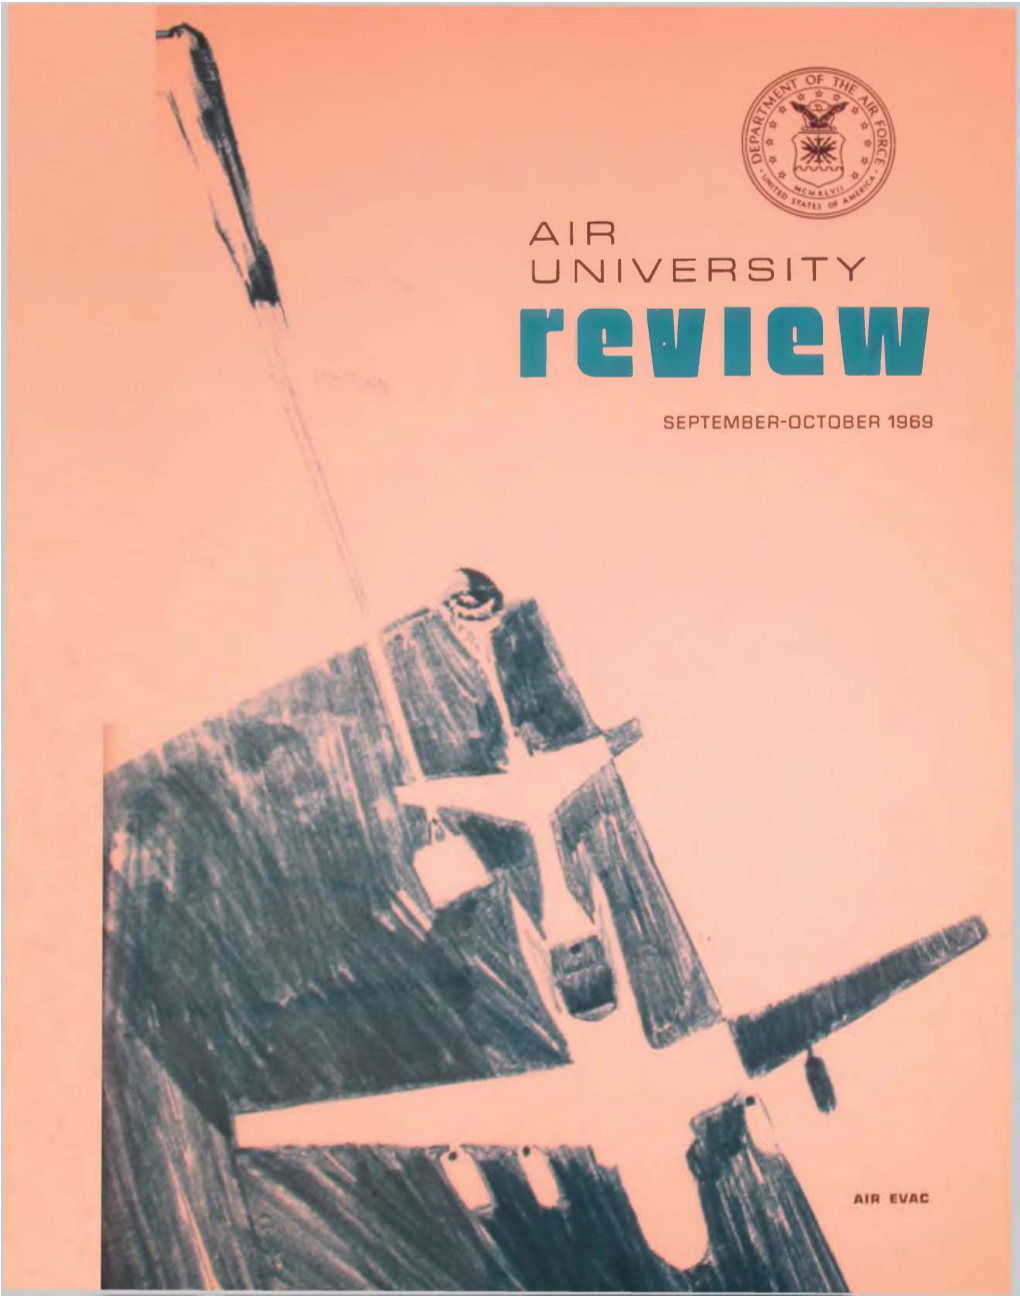 Air University Review: September-October 1969 Vol. XX No. 6